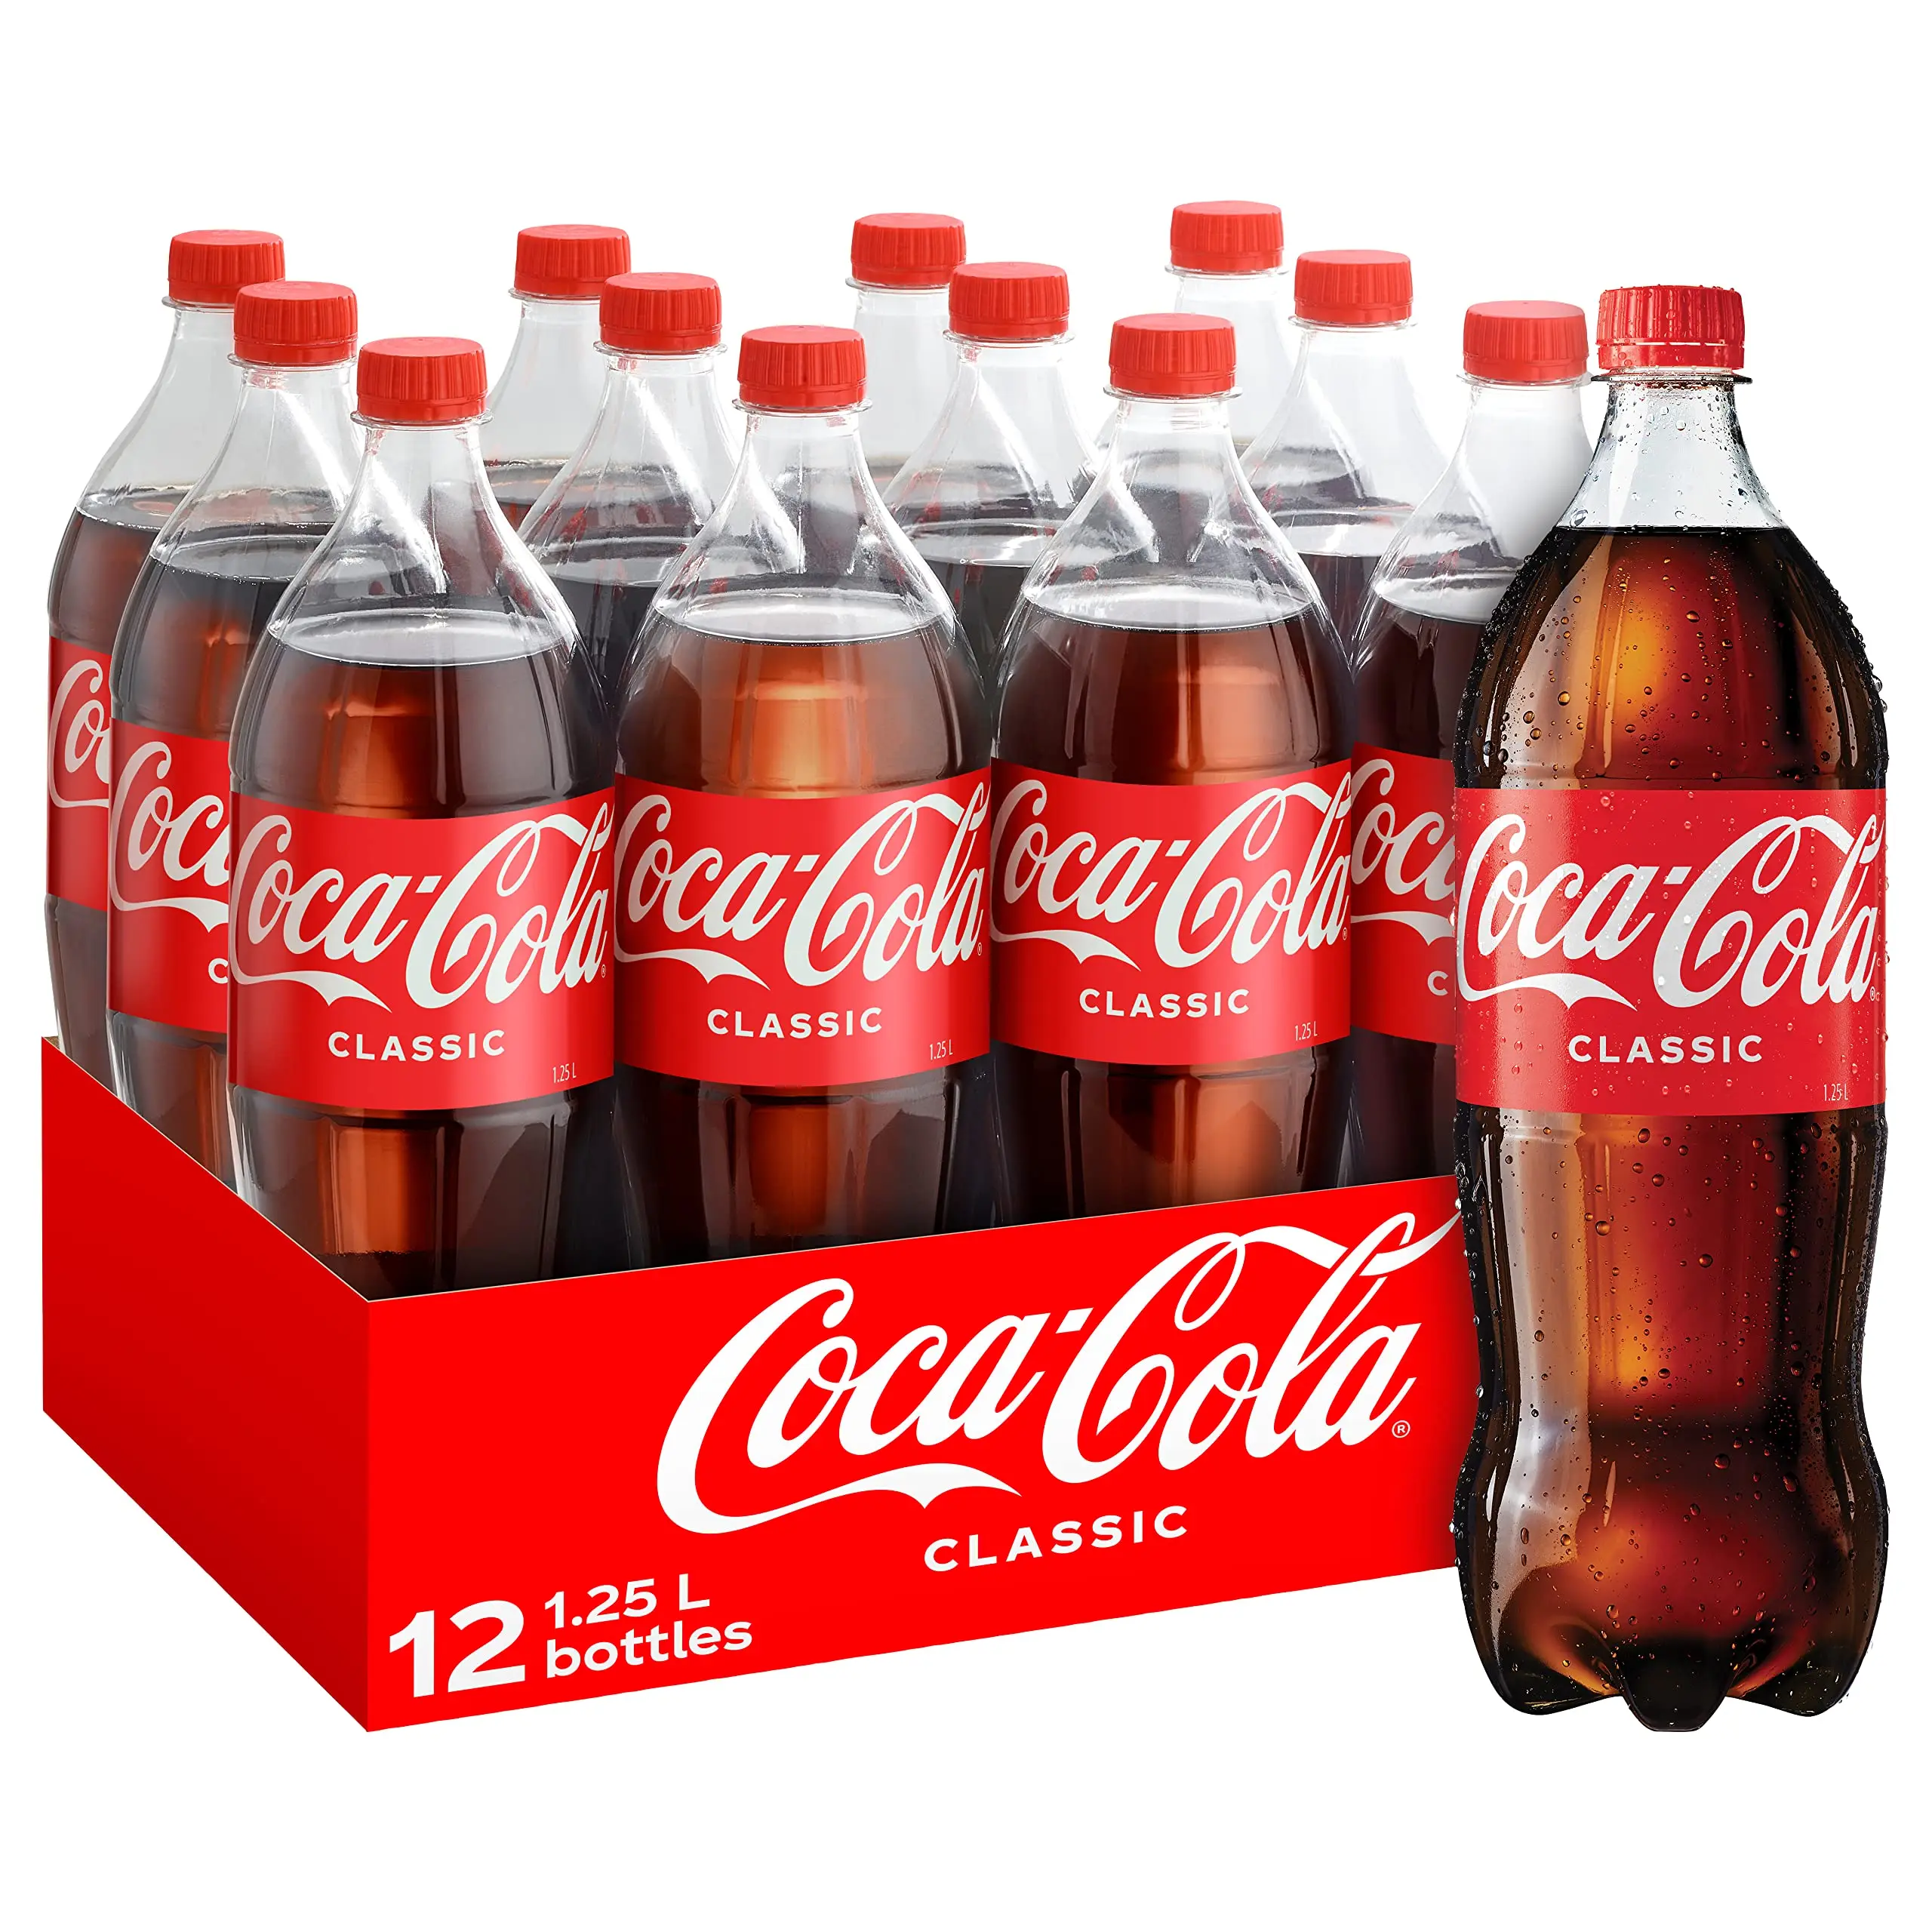 Купить колу оригинал. Кока кола. Кока кола Классик. Coca Cola коробка. Coca Cola 1 литр.